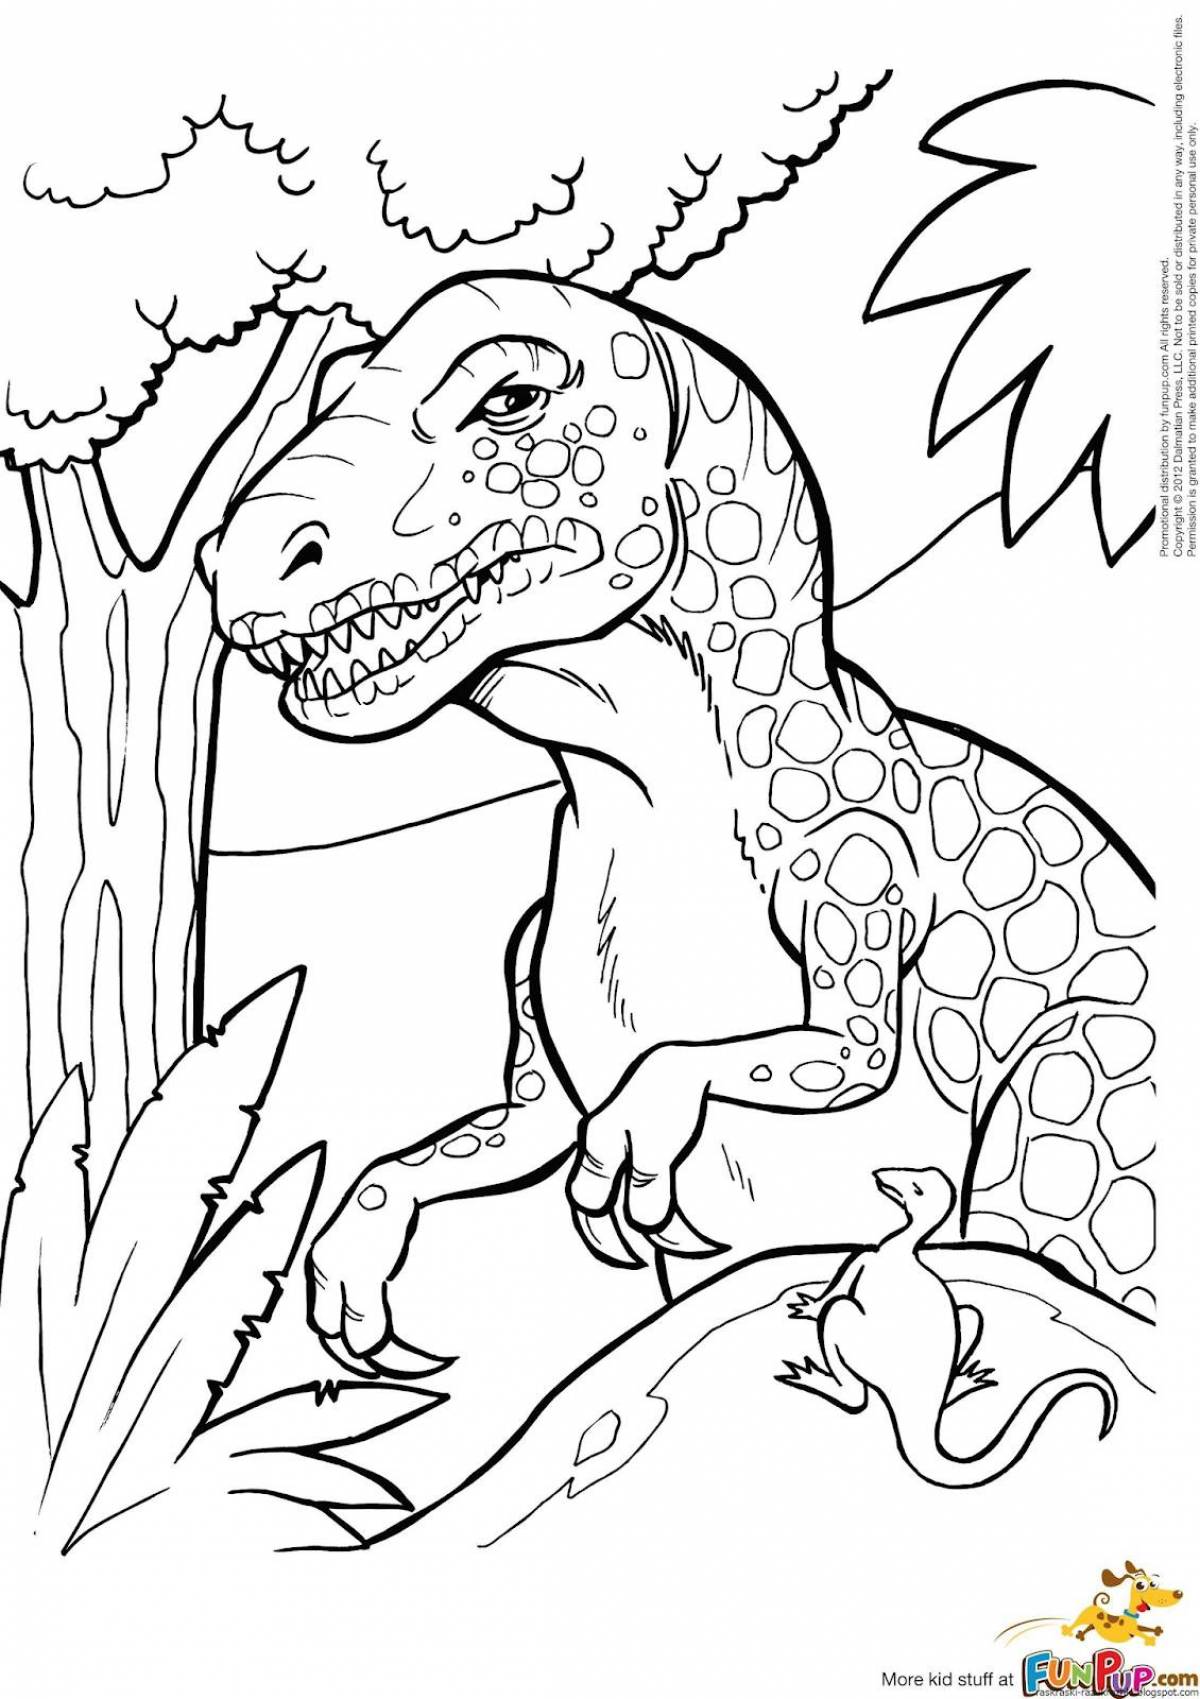 Fun coloring dinosaurs for boys